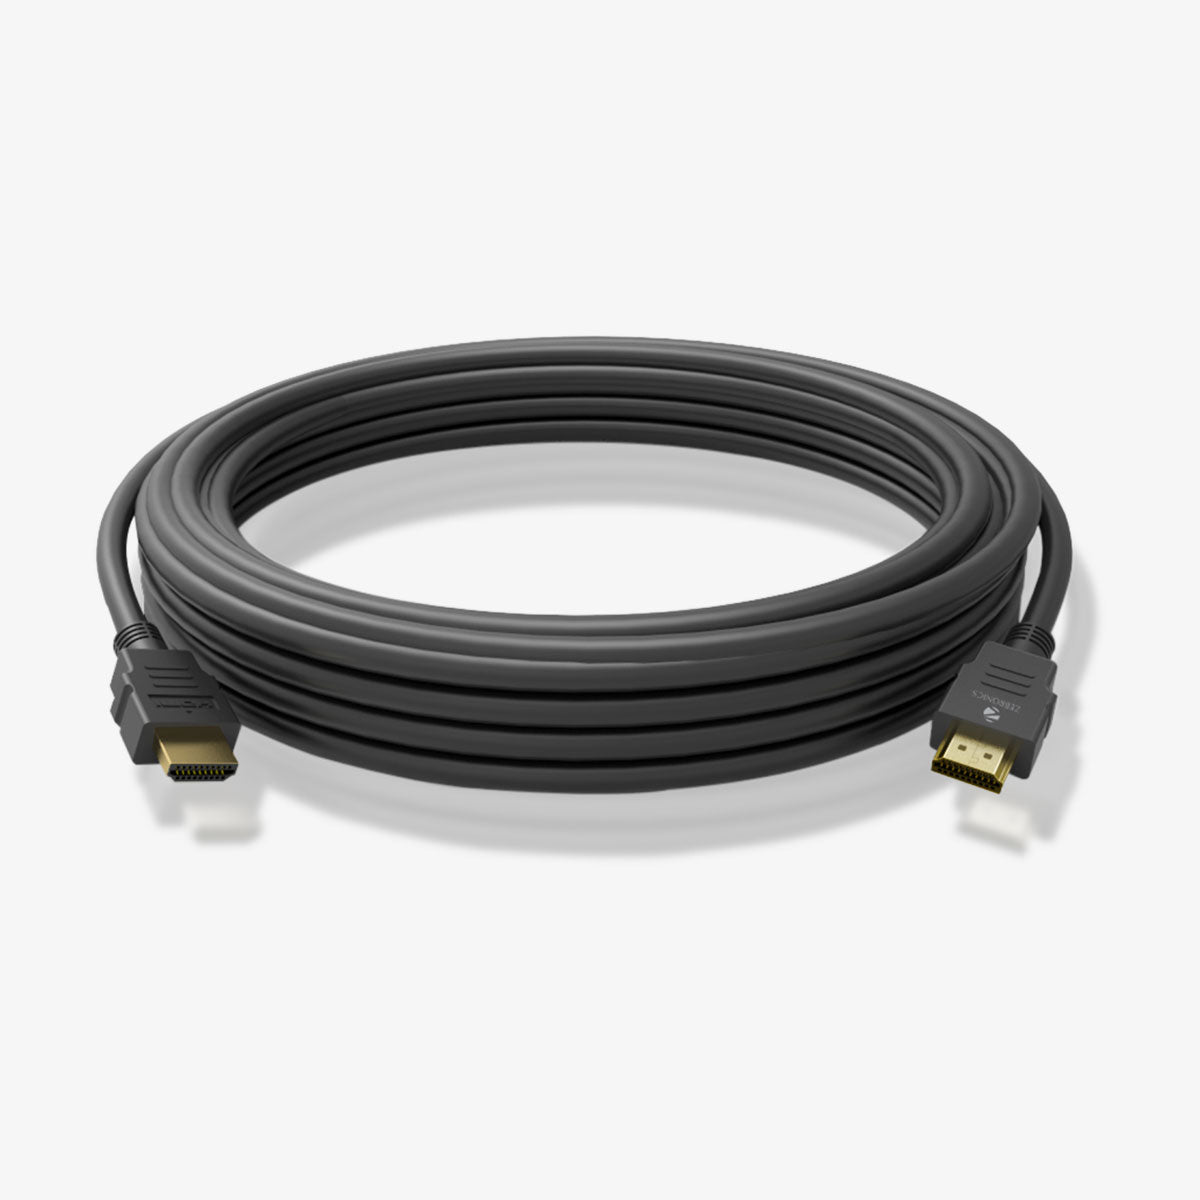 ZEB-HAA5020 (5 Meter) HDMI Cable - Zebronics